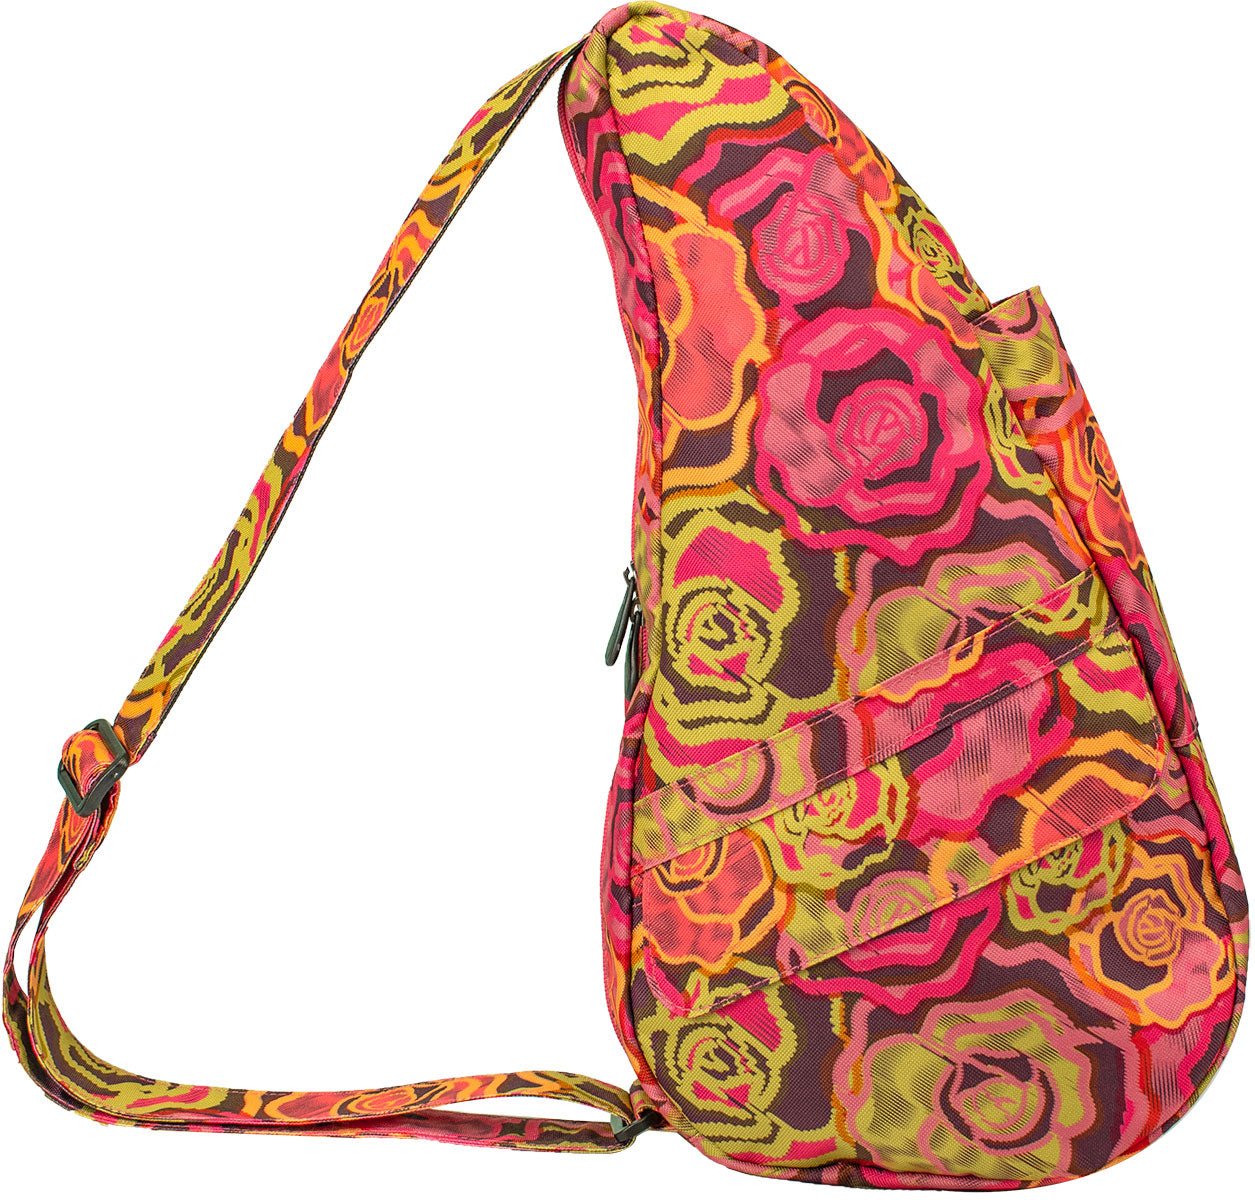 AmeriBag Small Healthy Back Bag Tote Prints and Patterns (Pop Art Floral)